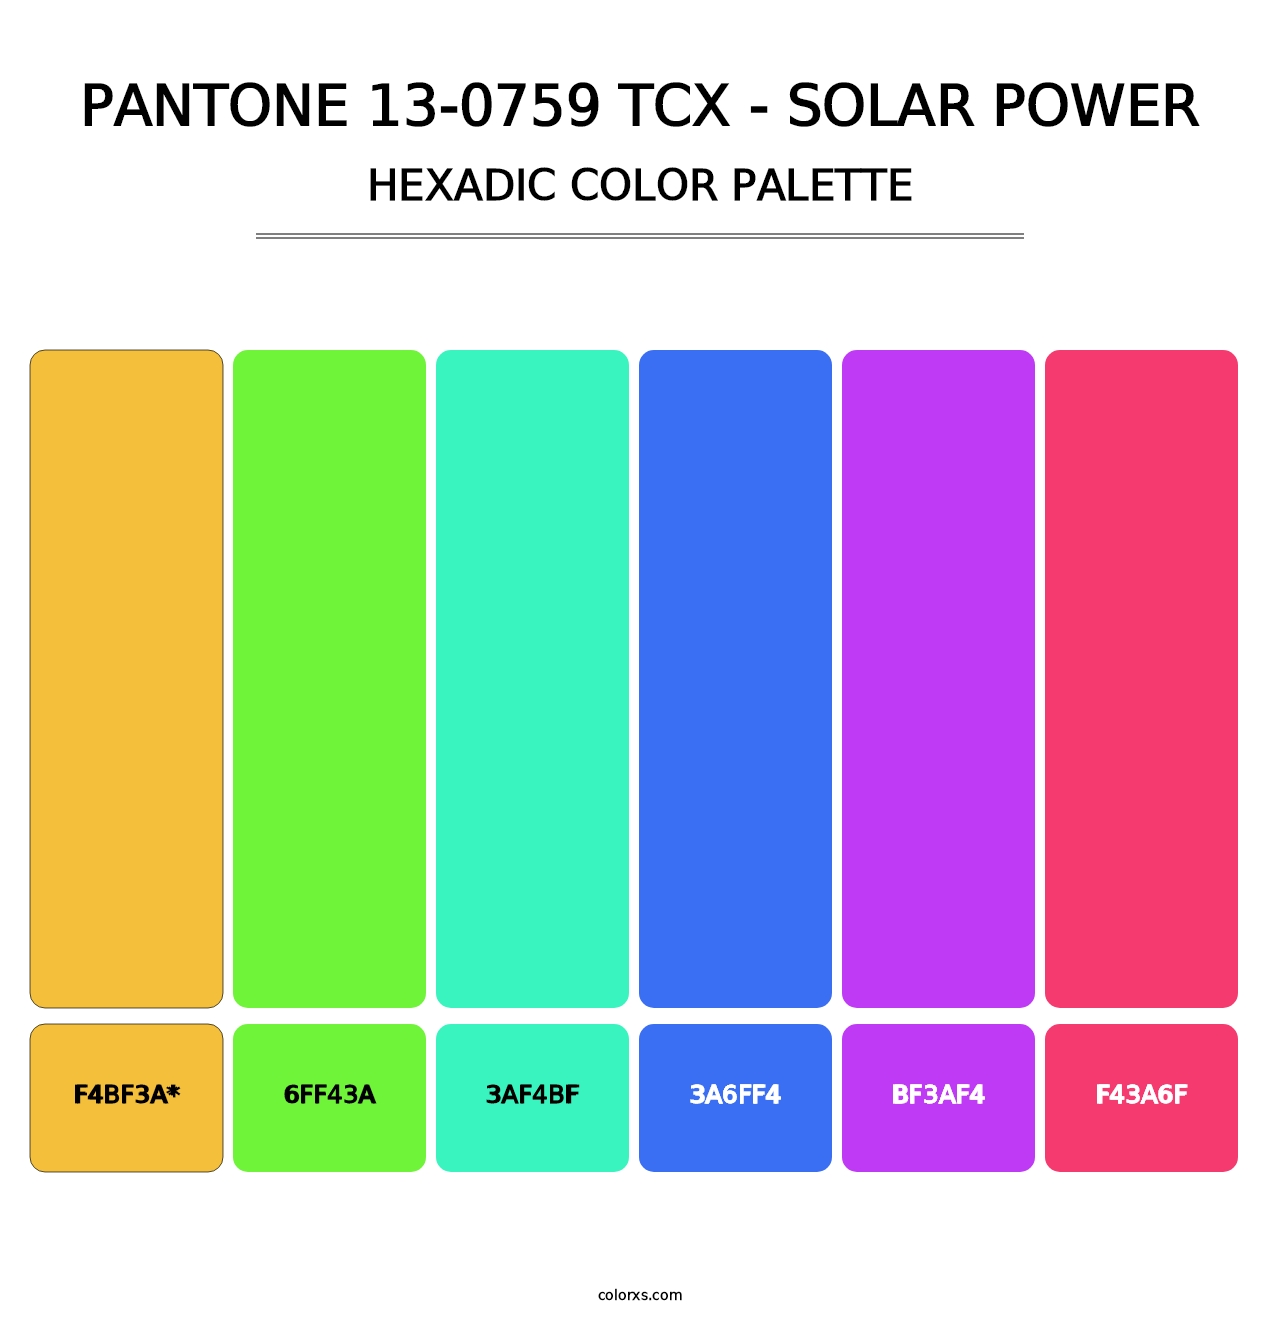 PANTONE 13-0759 TCX - Solar Power - Hexadic Color Palette